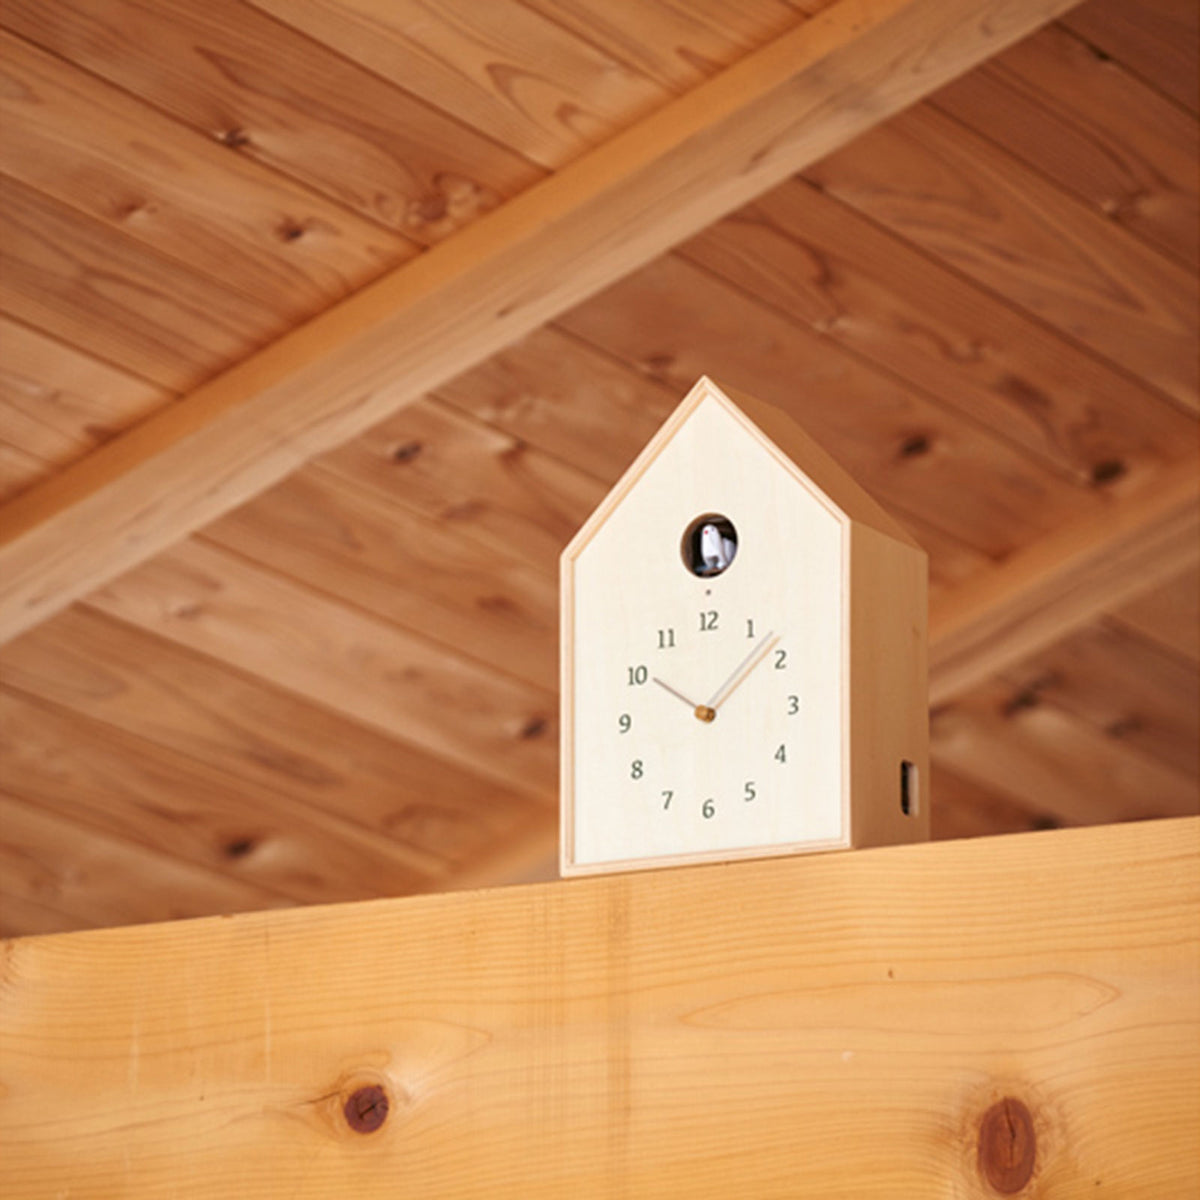 Plywood Birdhouse Cuckoo Clock displayed on a wood beam.